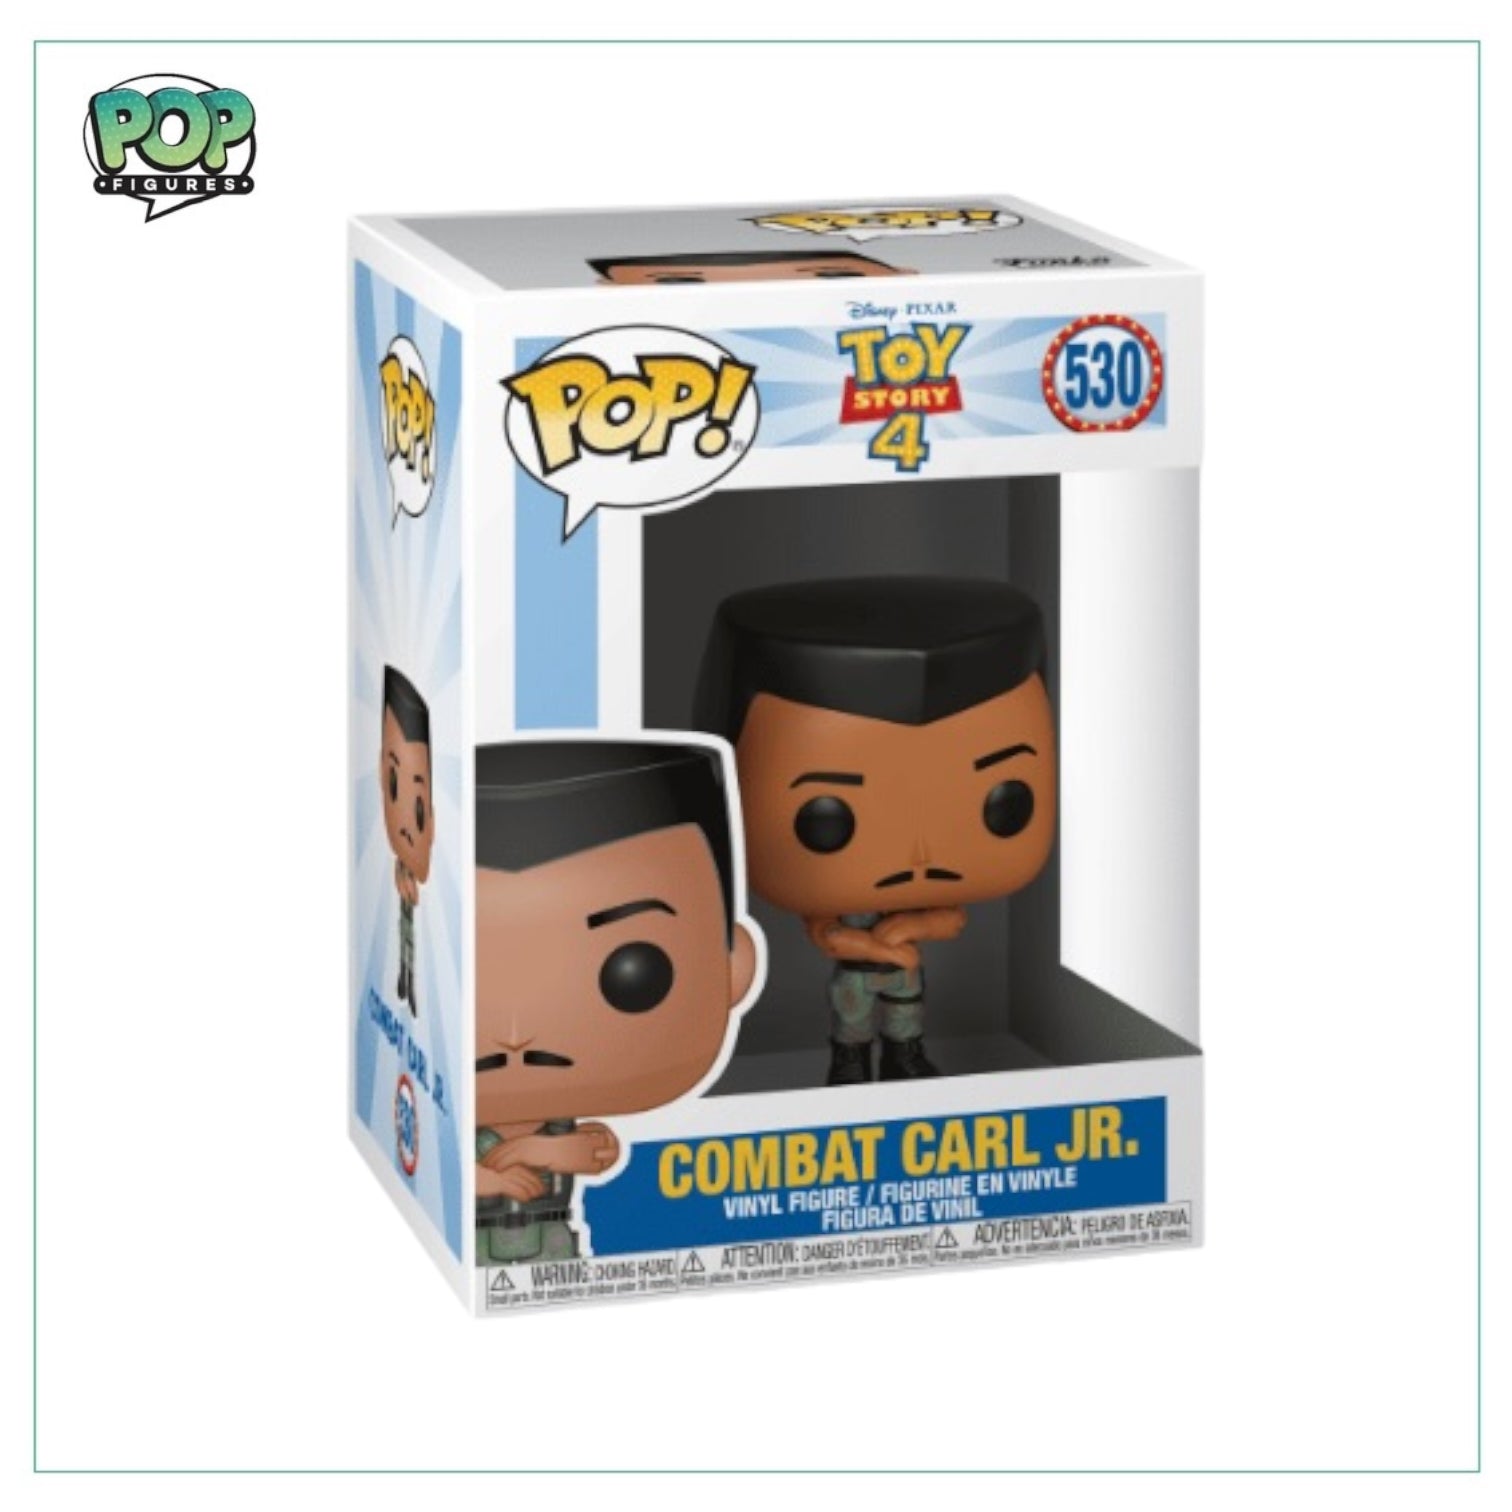 Combat Carl Jr. #530 Funko Pop! - Toy Story 4